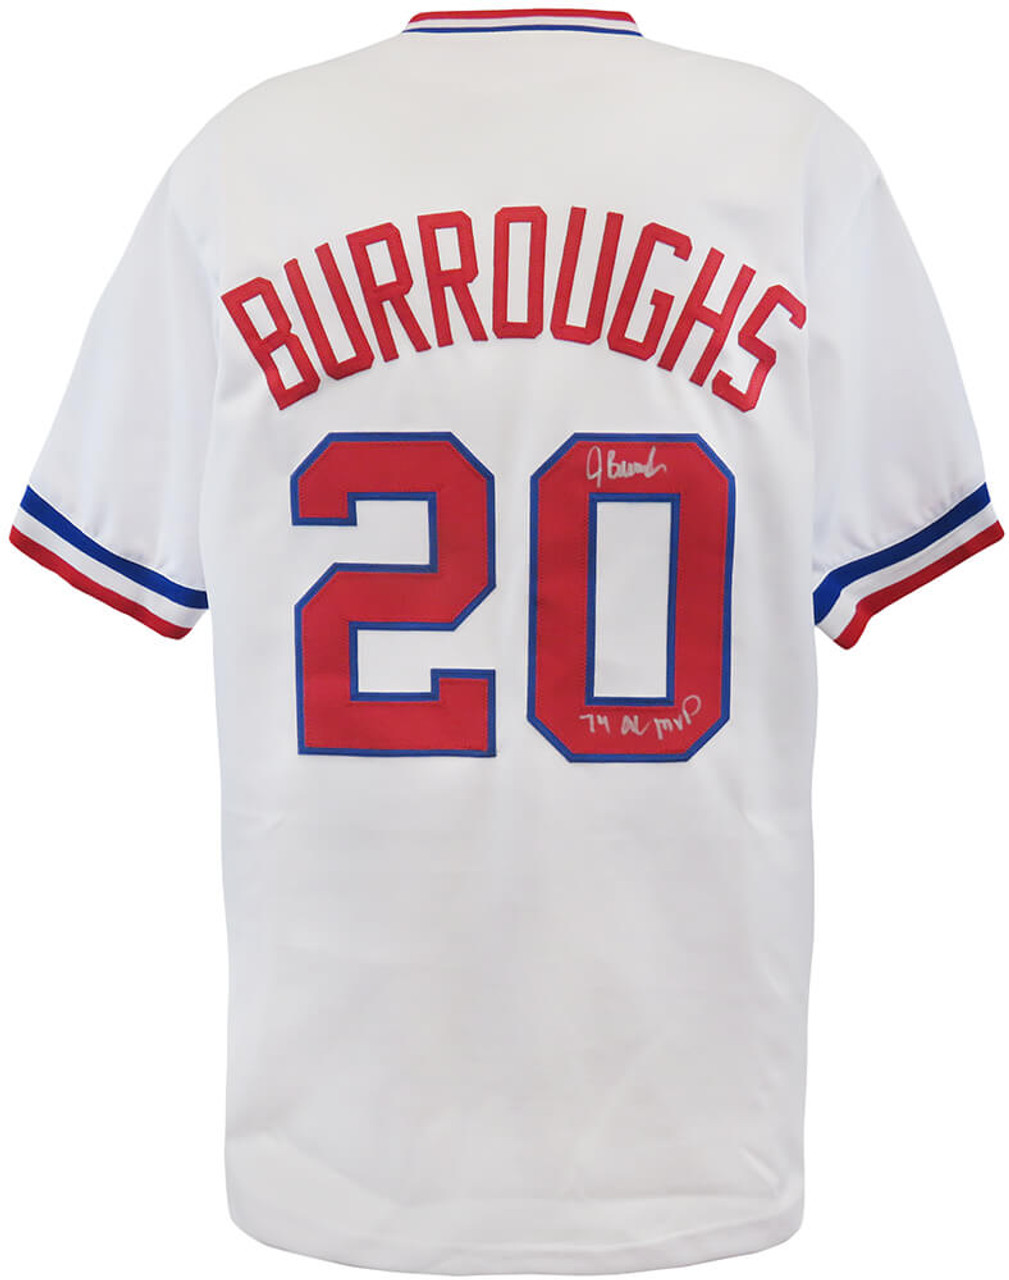 Texas Rangers Jeff Burroughs Signed White Jersey w/74 AL MVP